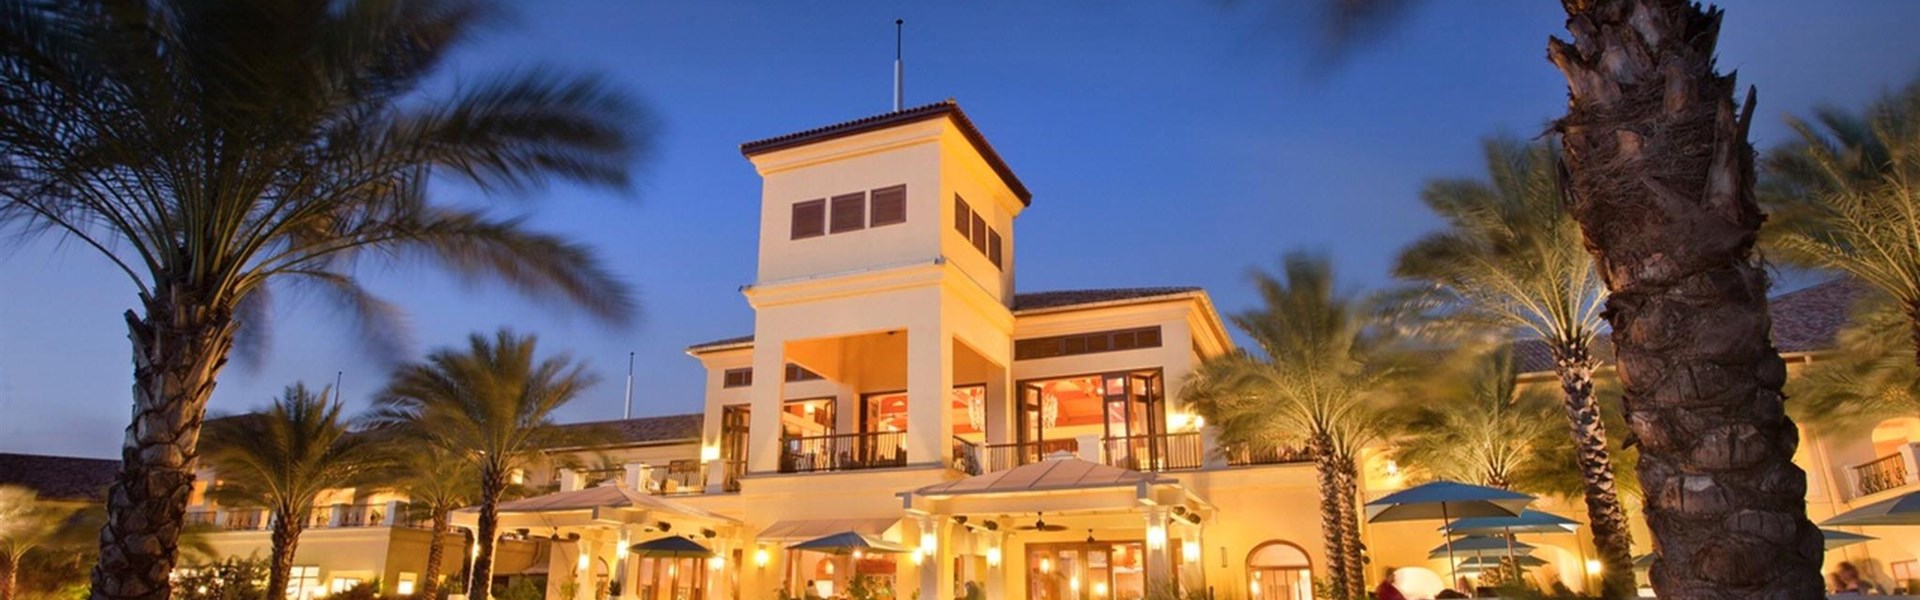 Marco Polo - Santa Barbara Beach and Golf Resort - 